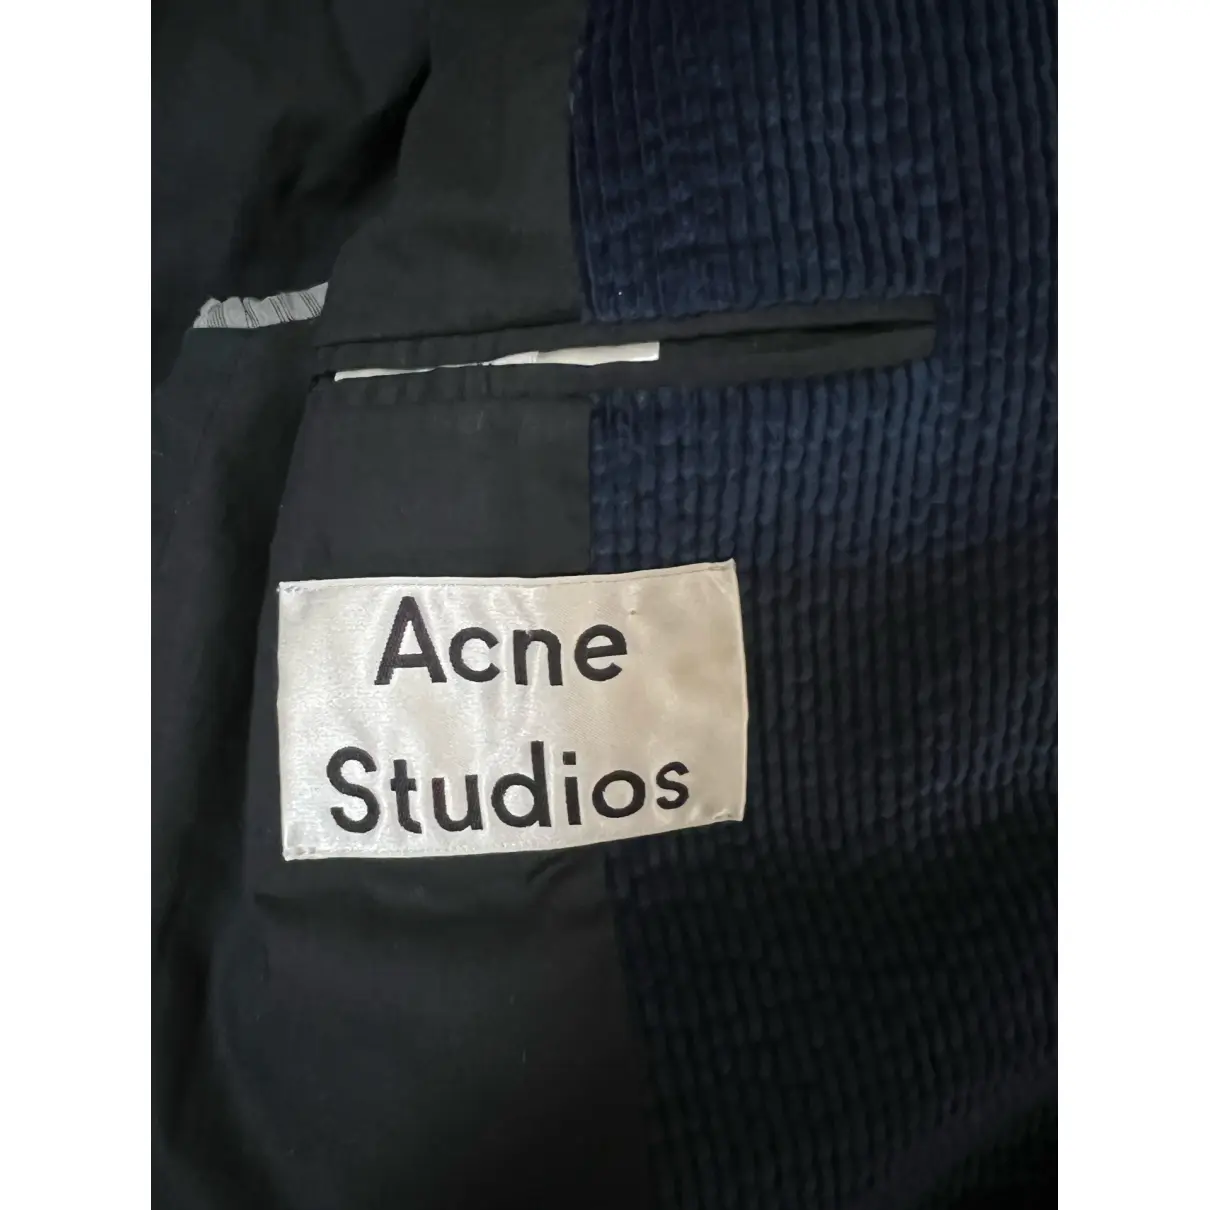 Buy Acne Studios Blazer online